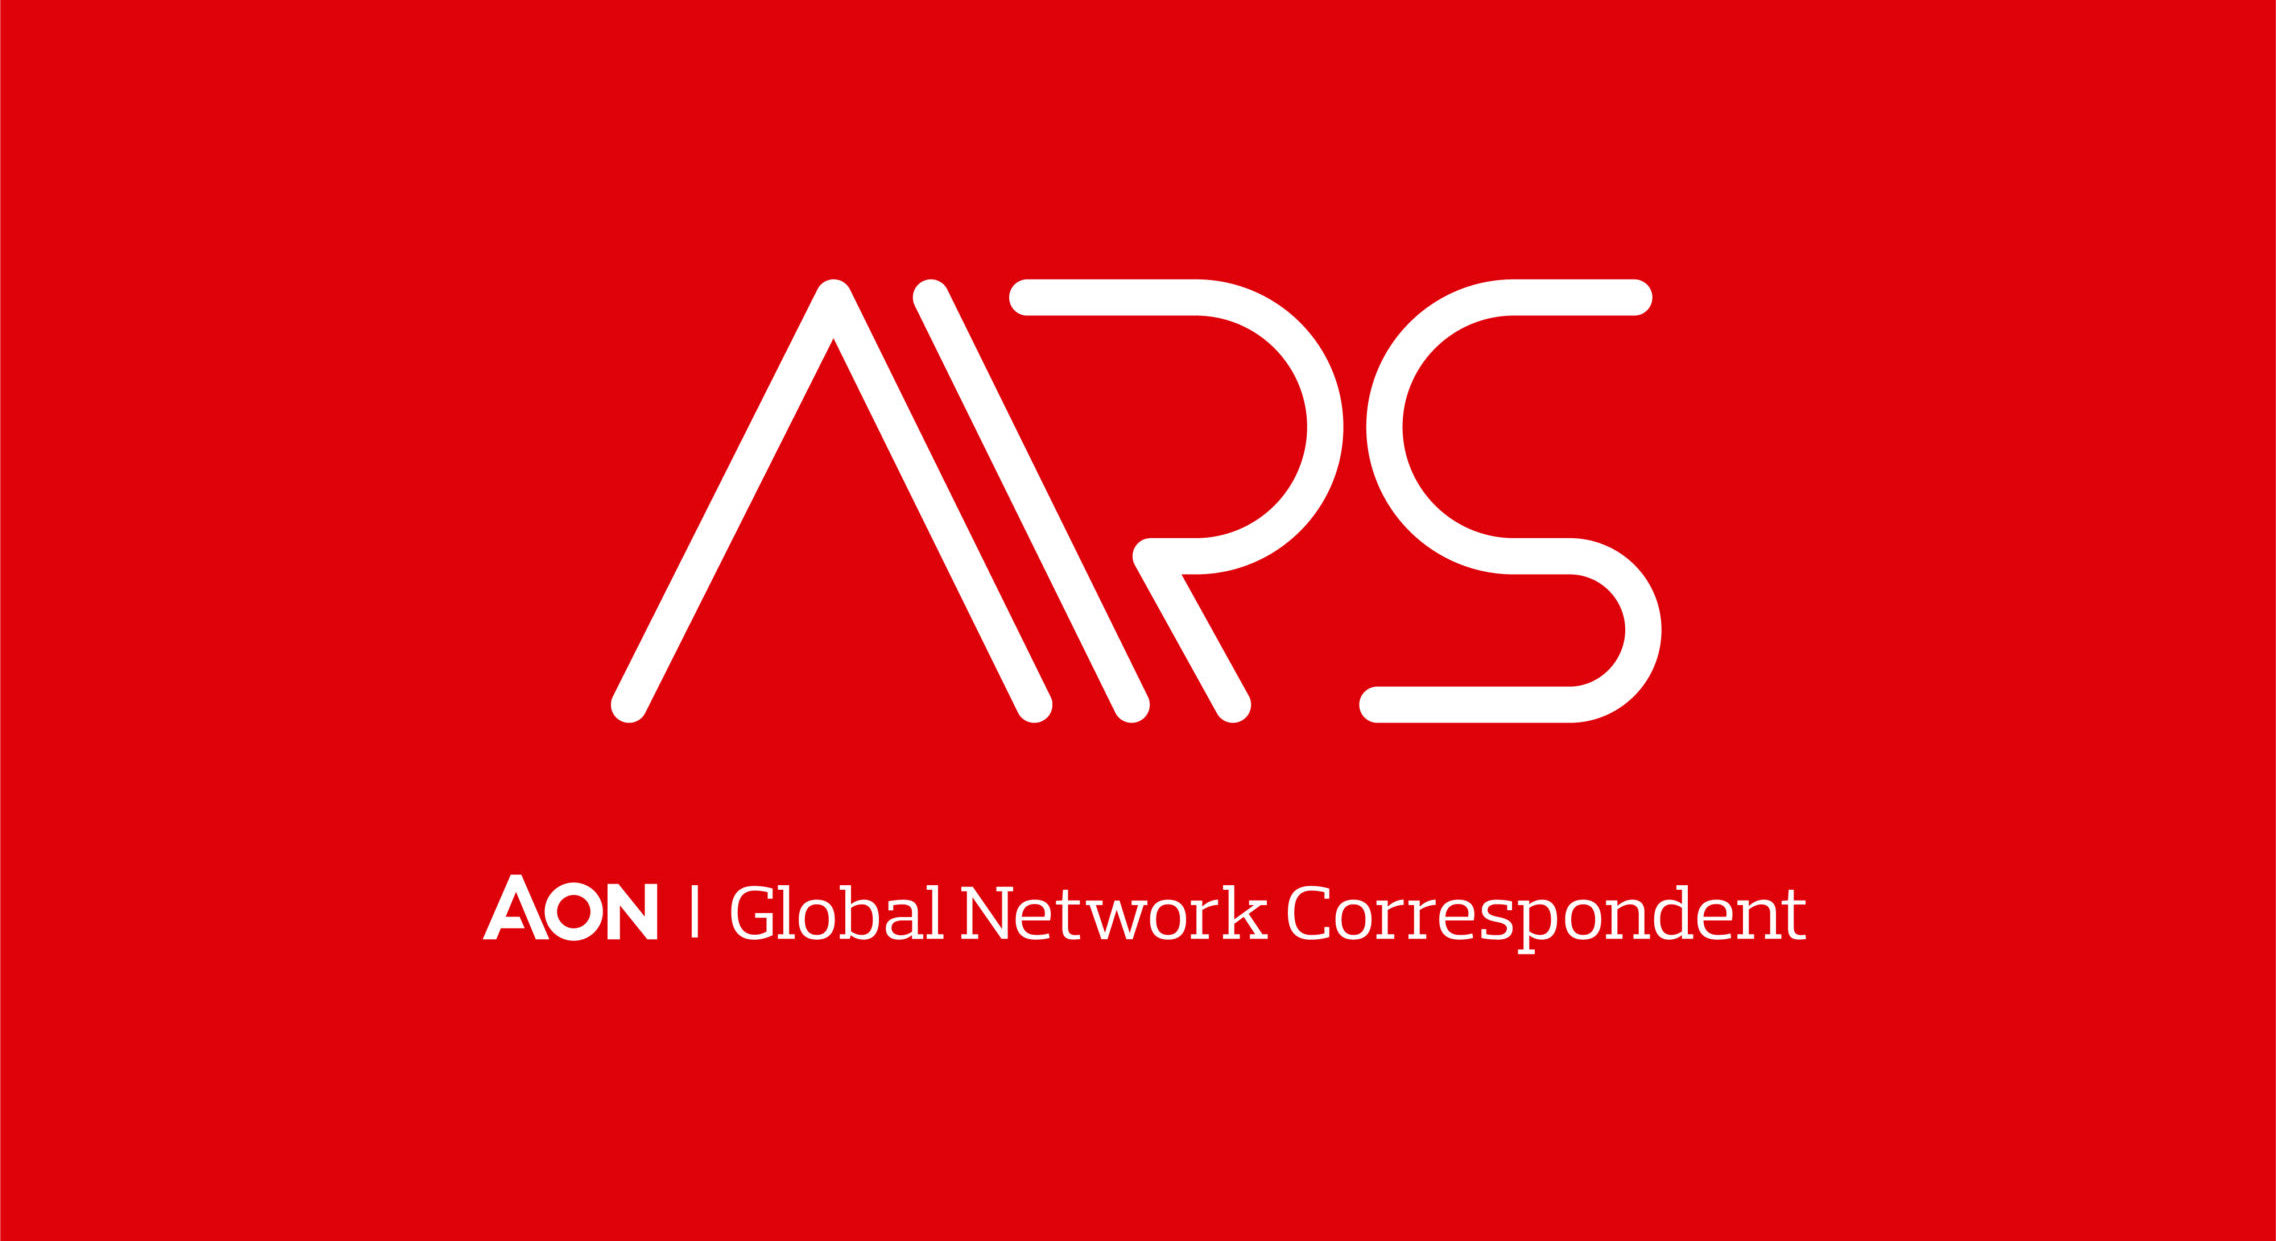 ARS AON Logo Red scaled e1684308988406